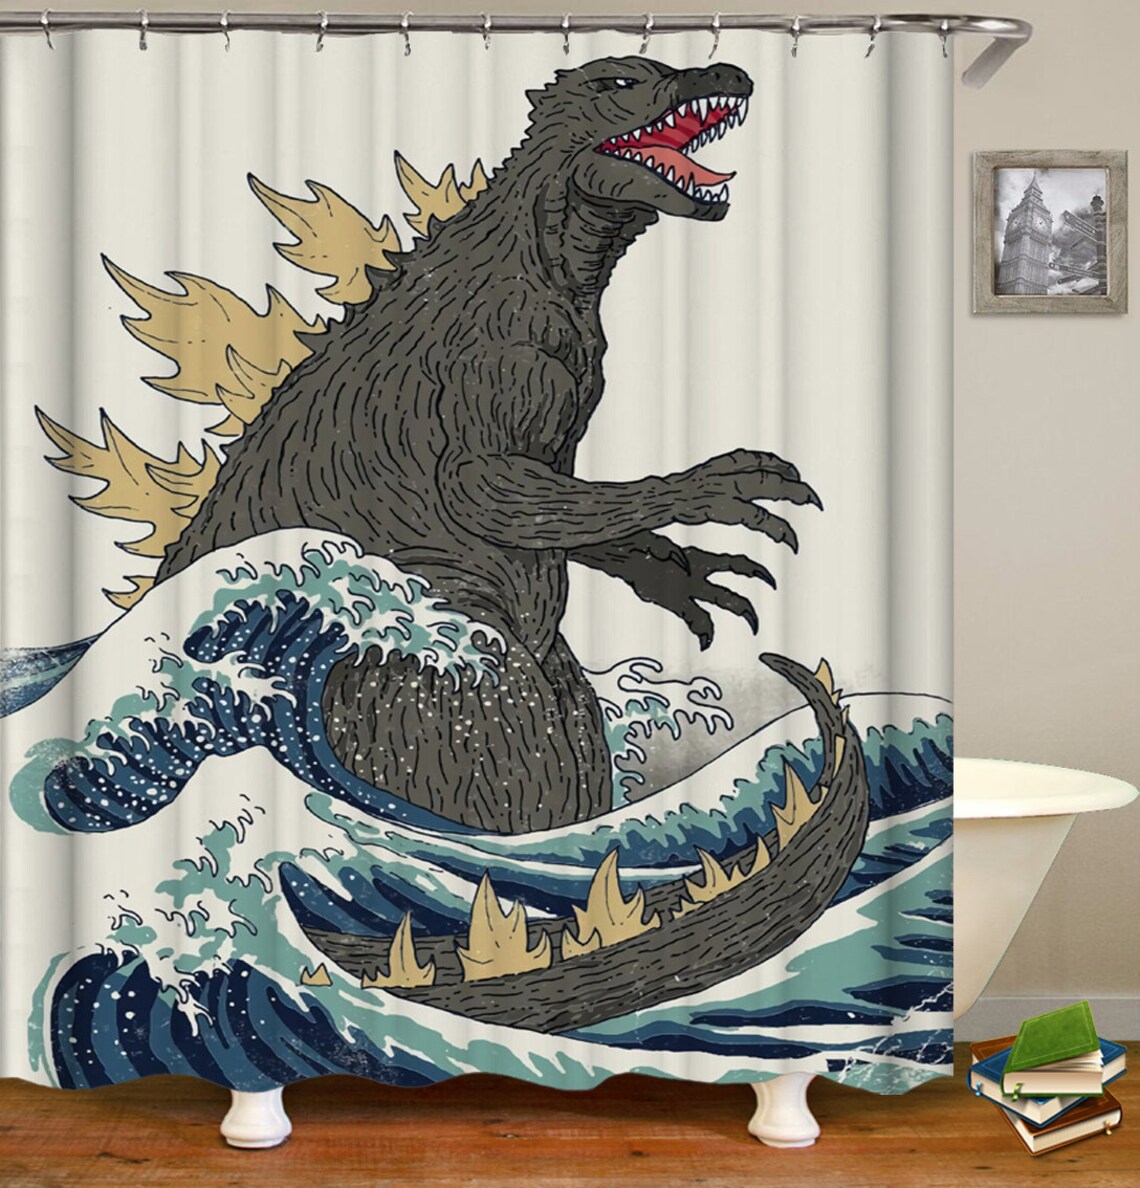 Godzilla 3D Printed Fabric Waterproof Bathroom Shower Curtain Etsy